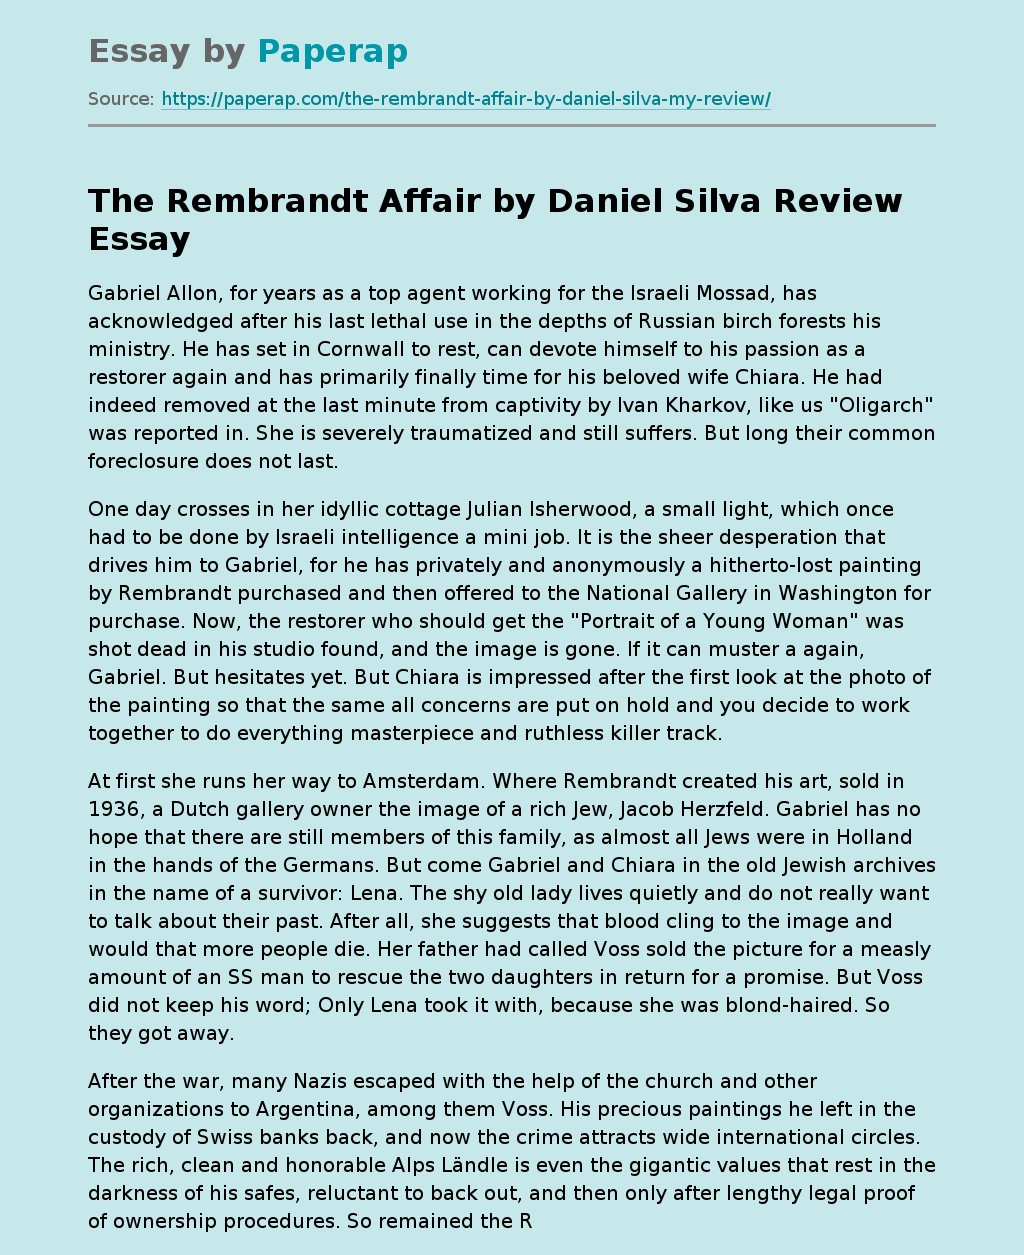 "The Rembrandt Affair" by Daniel Silva